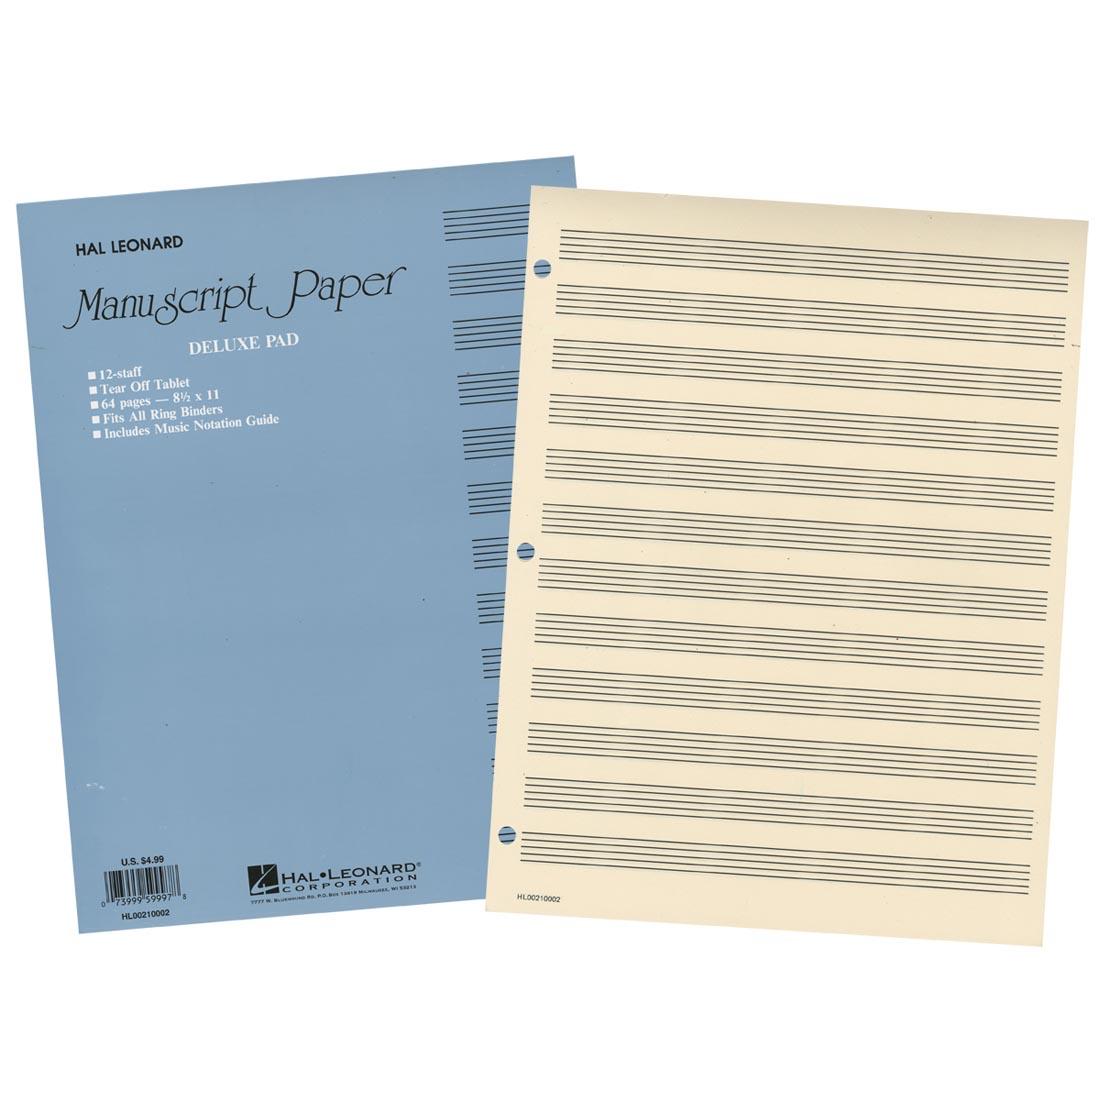 Hal Leonard Manuscript Music Paper Deluxe Pad